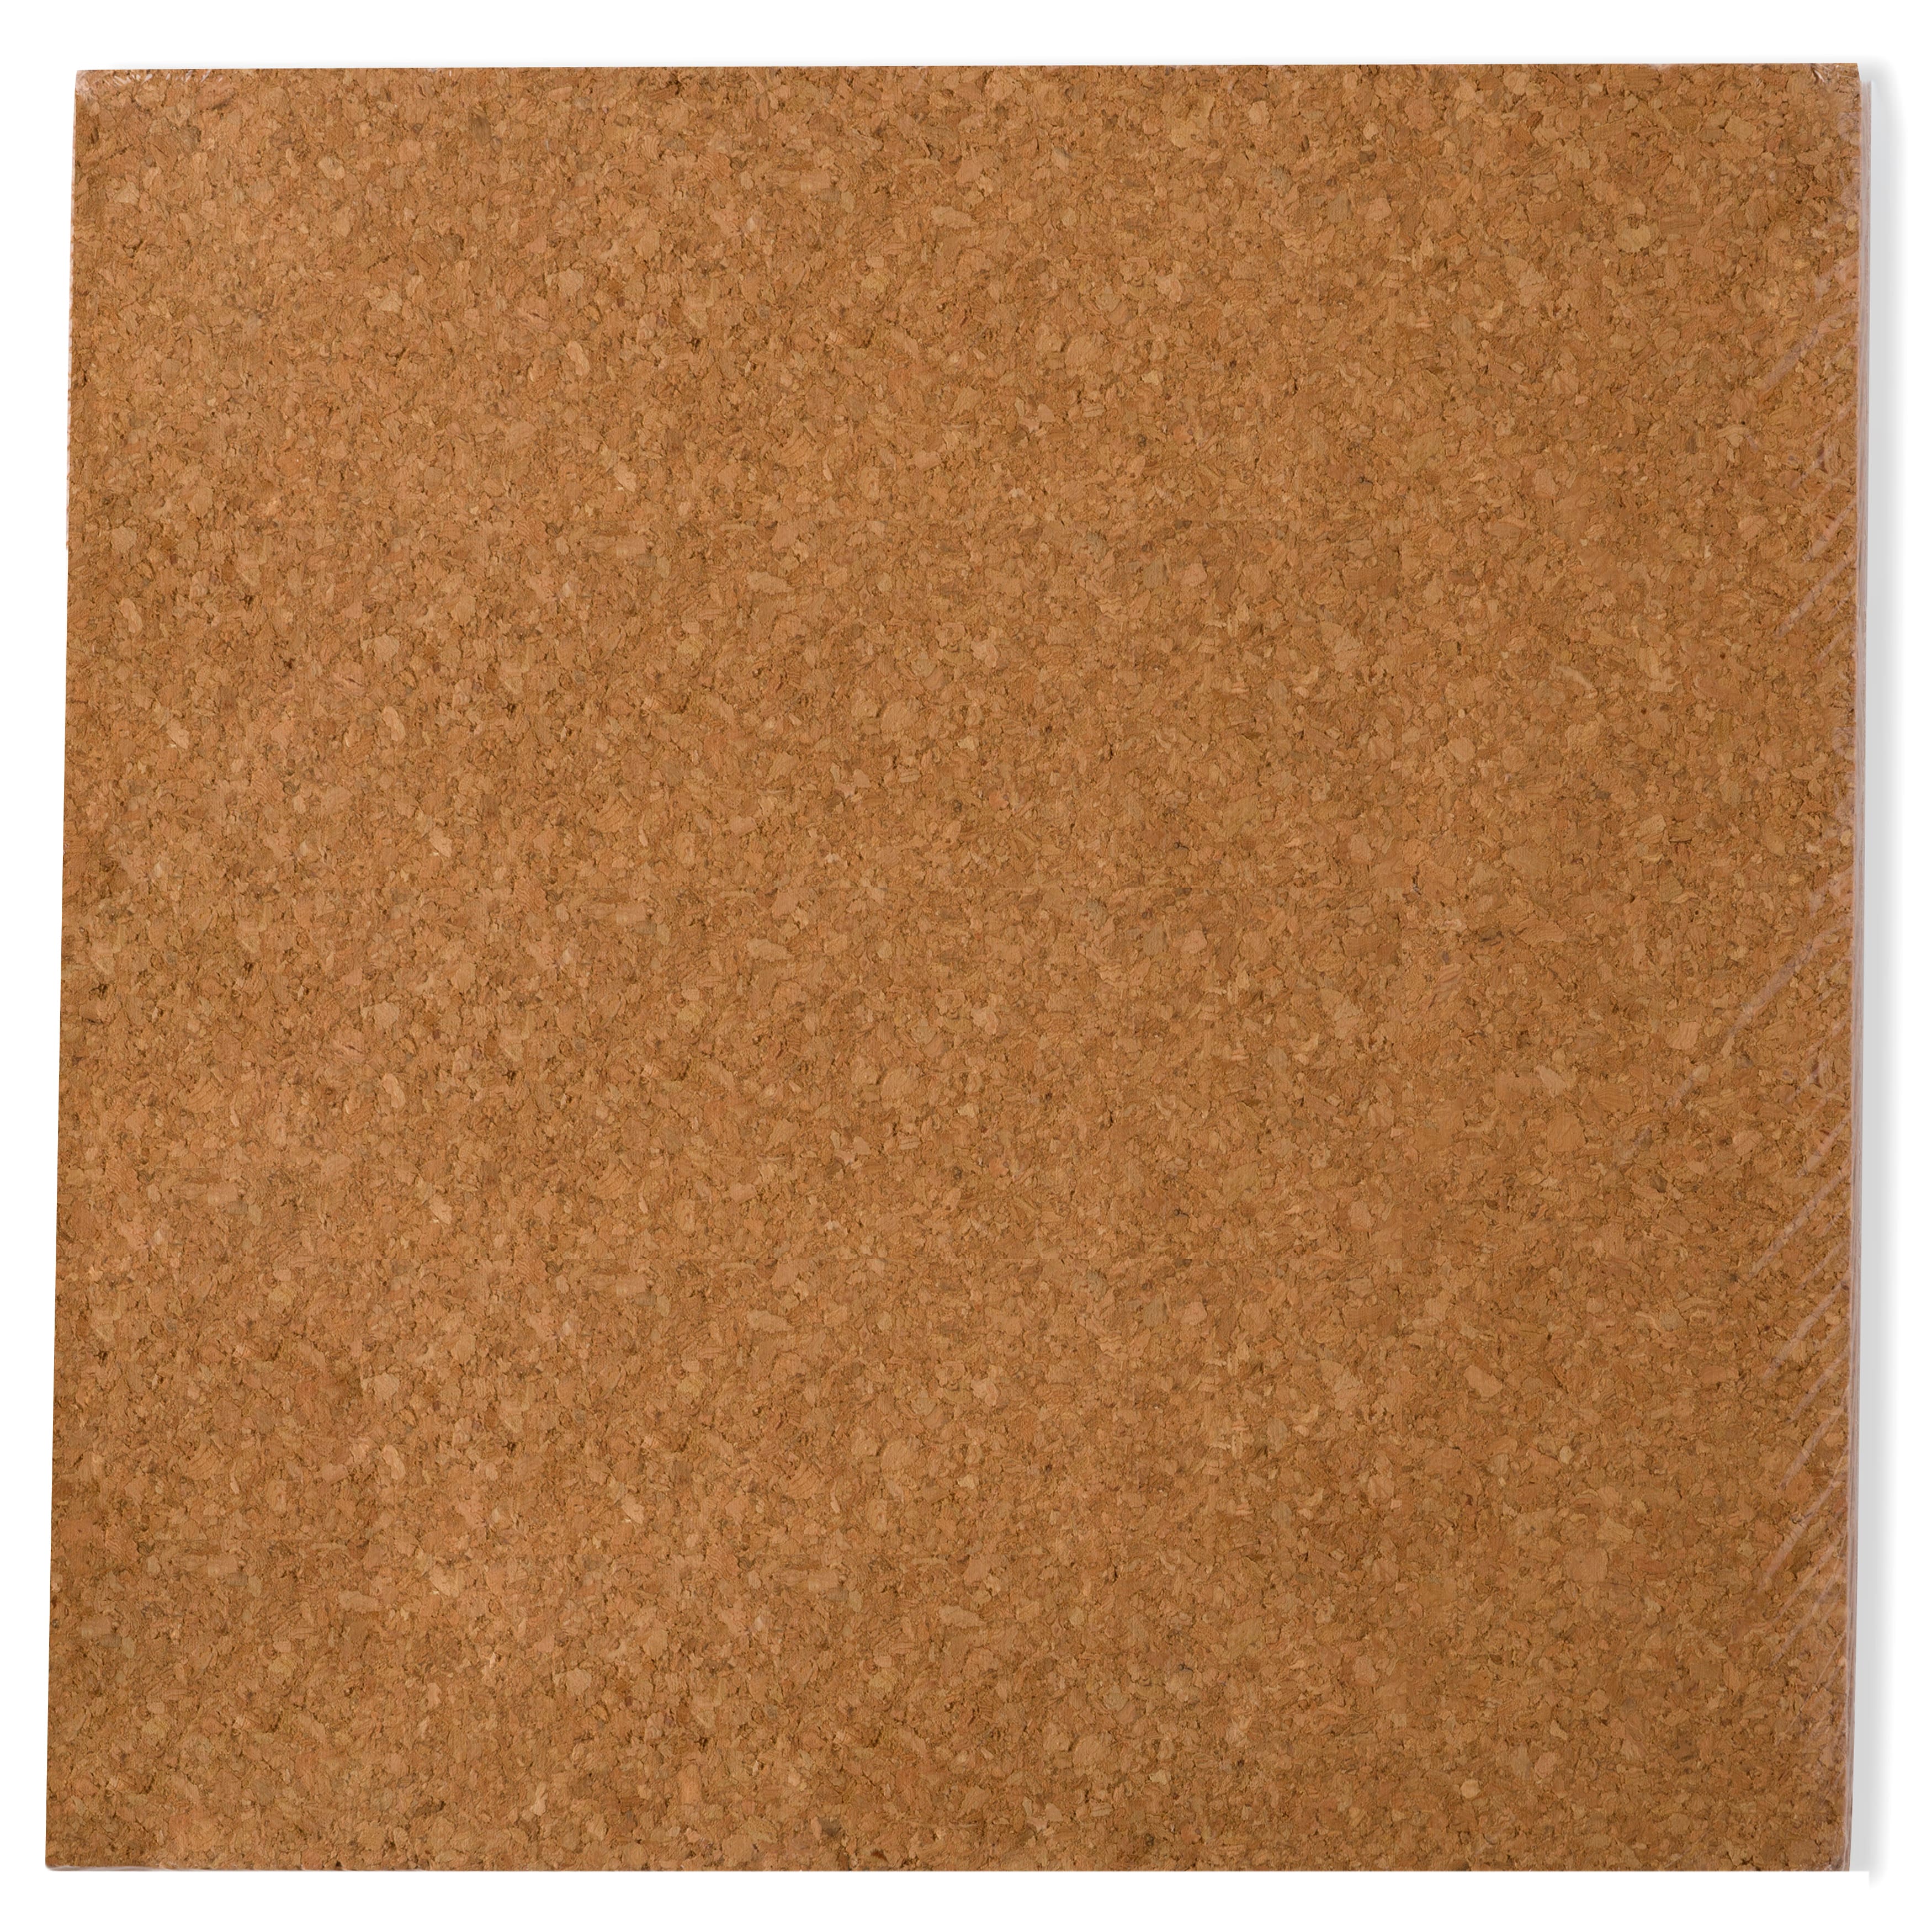 Cork Sheets - Plain 24 x 36, 1/16 thick